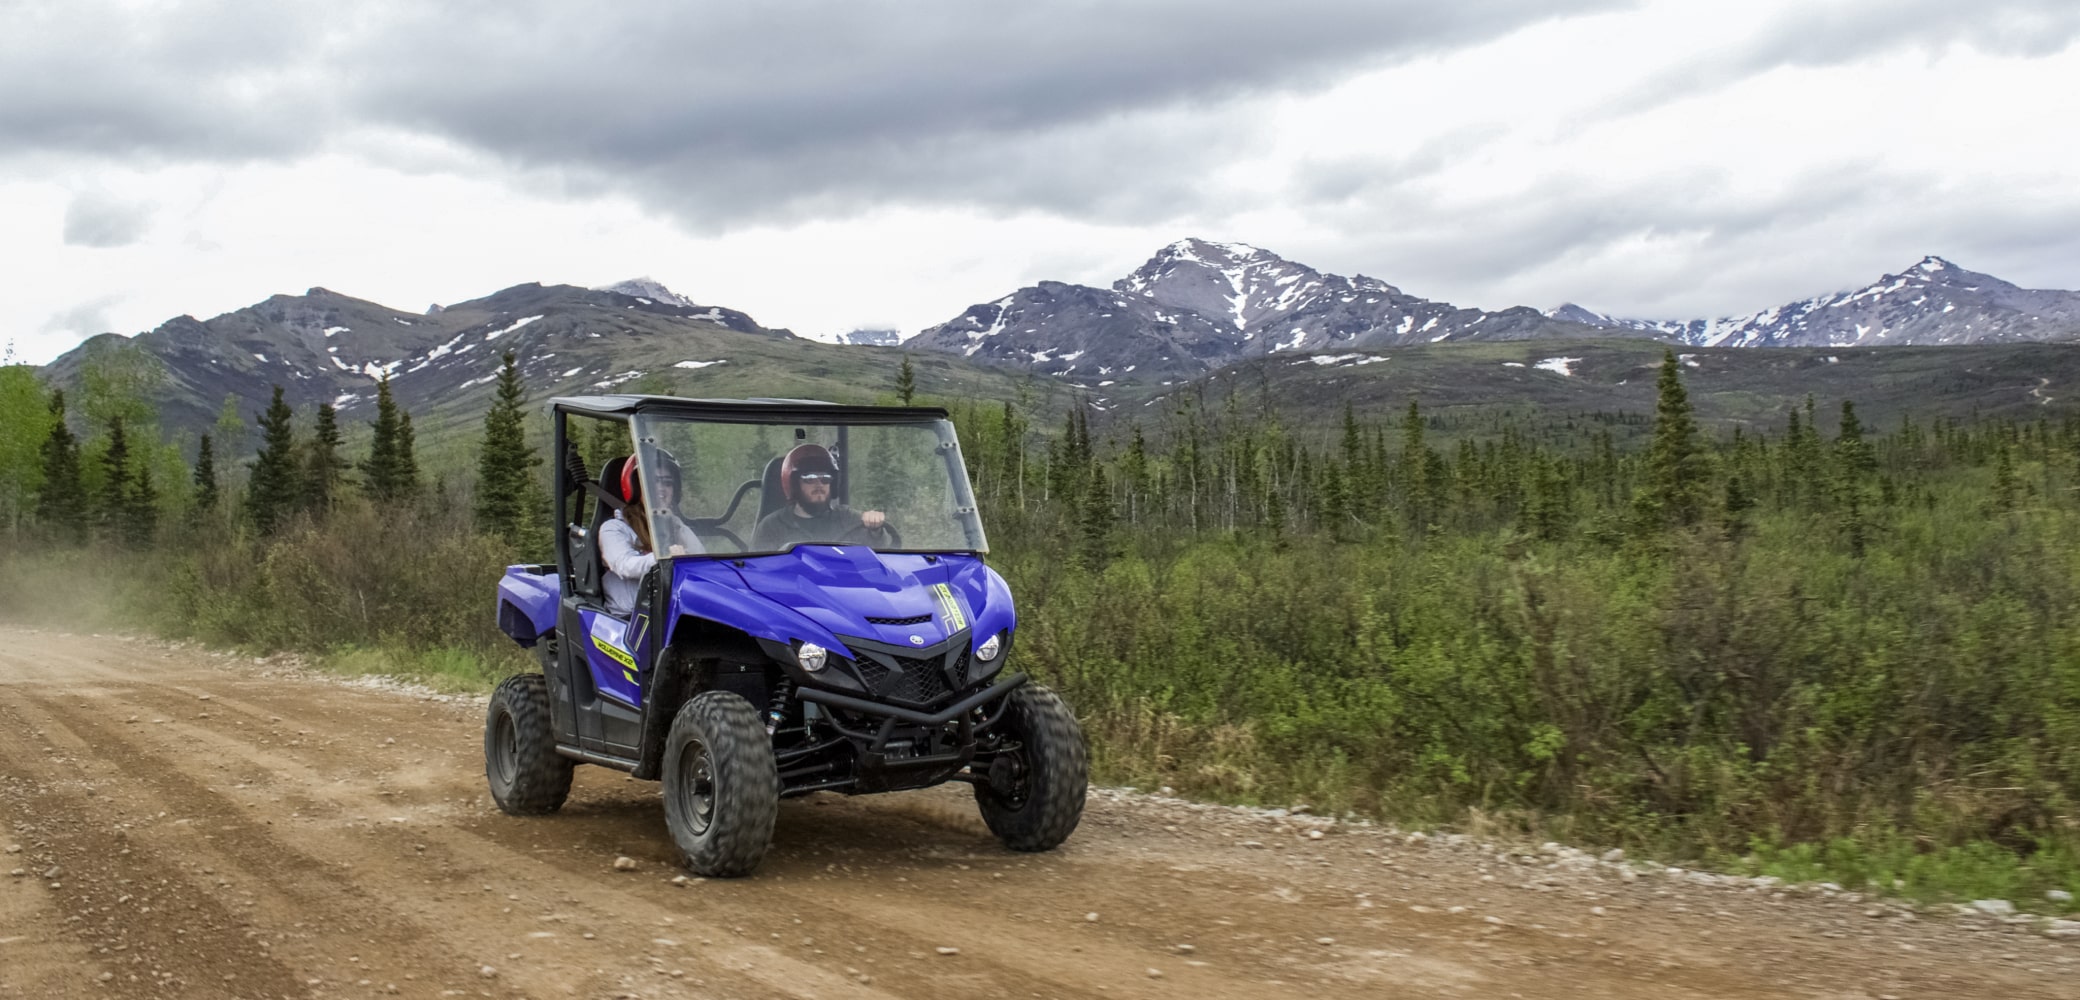 Driving an ATV on the Denali Wilderness tour